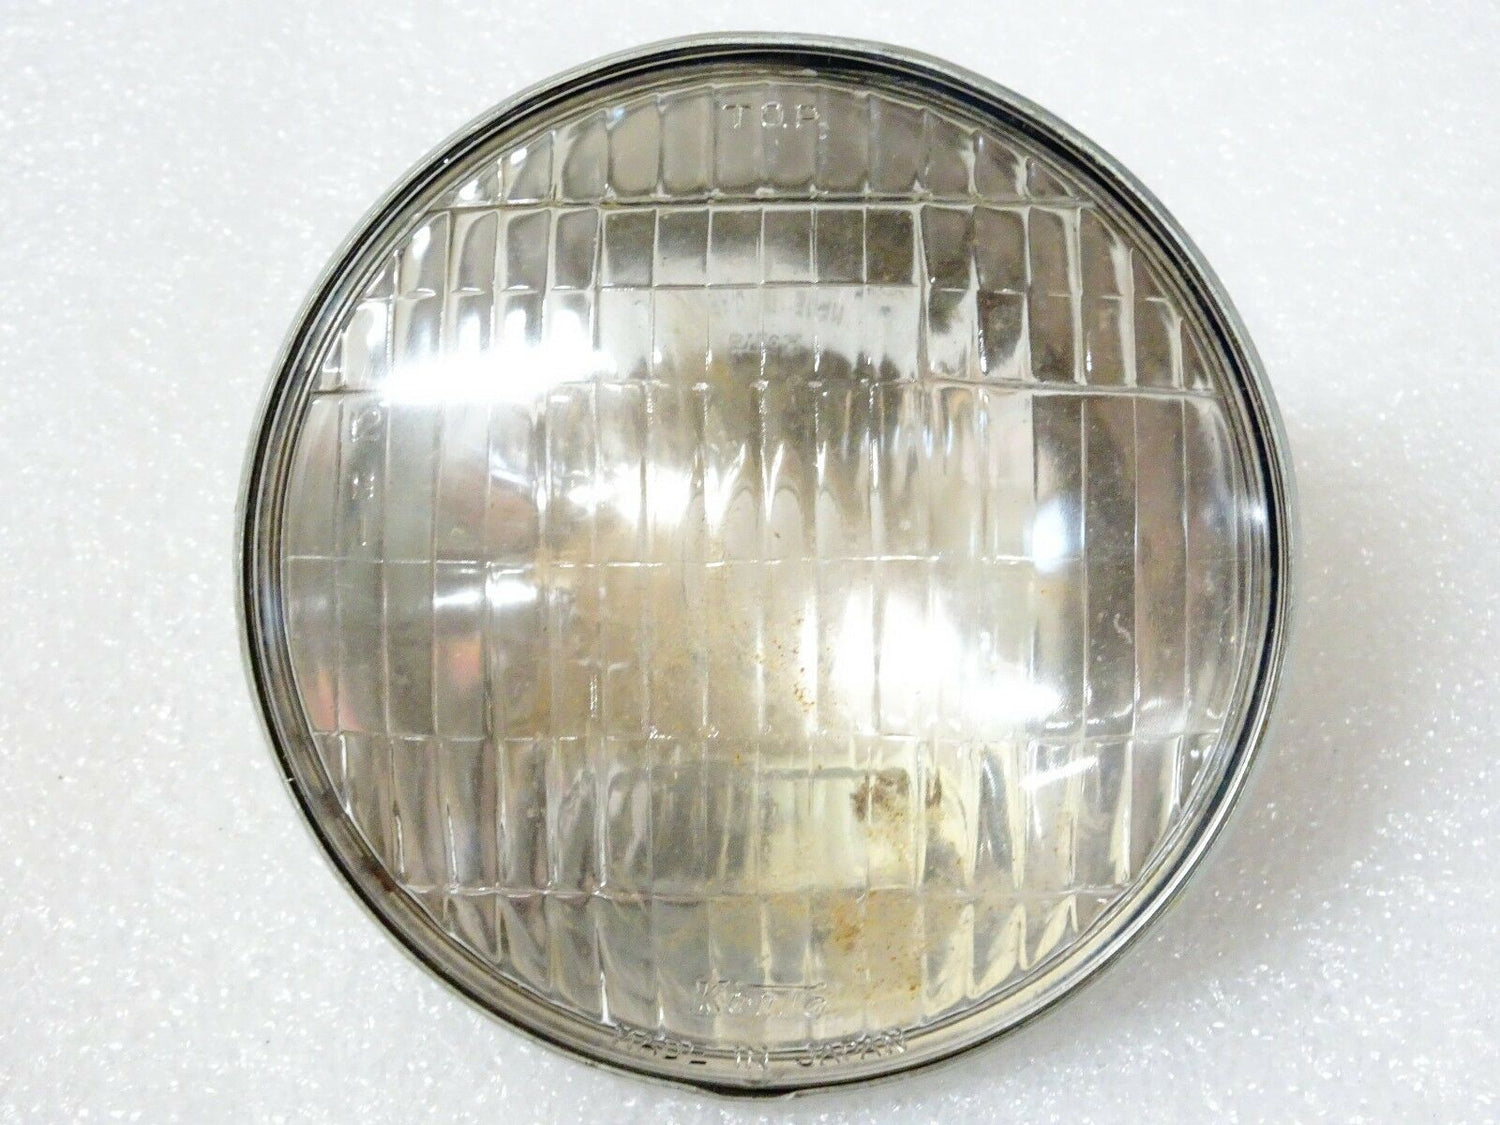 Kawasaki Lighting - Headlight / Tail Light / Turn Signal / Turn Signal Stay / Bulb / Lenses / Rim / Reflectors / Marker Lights / Etc.